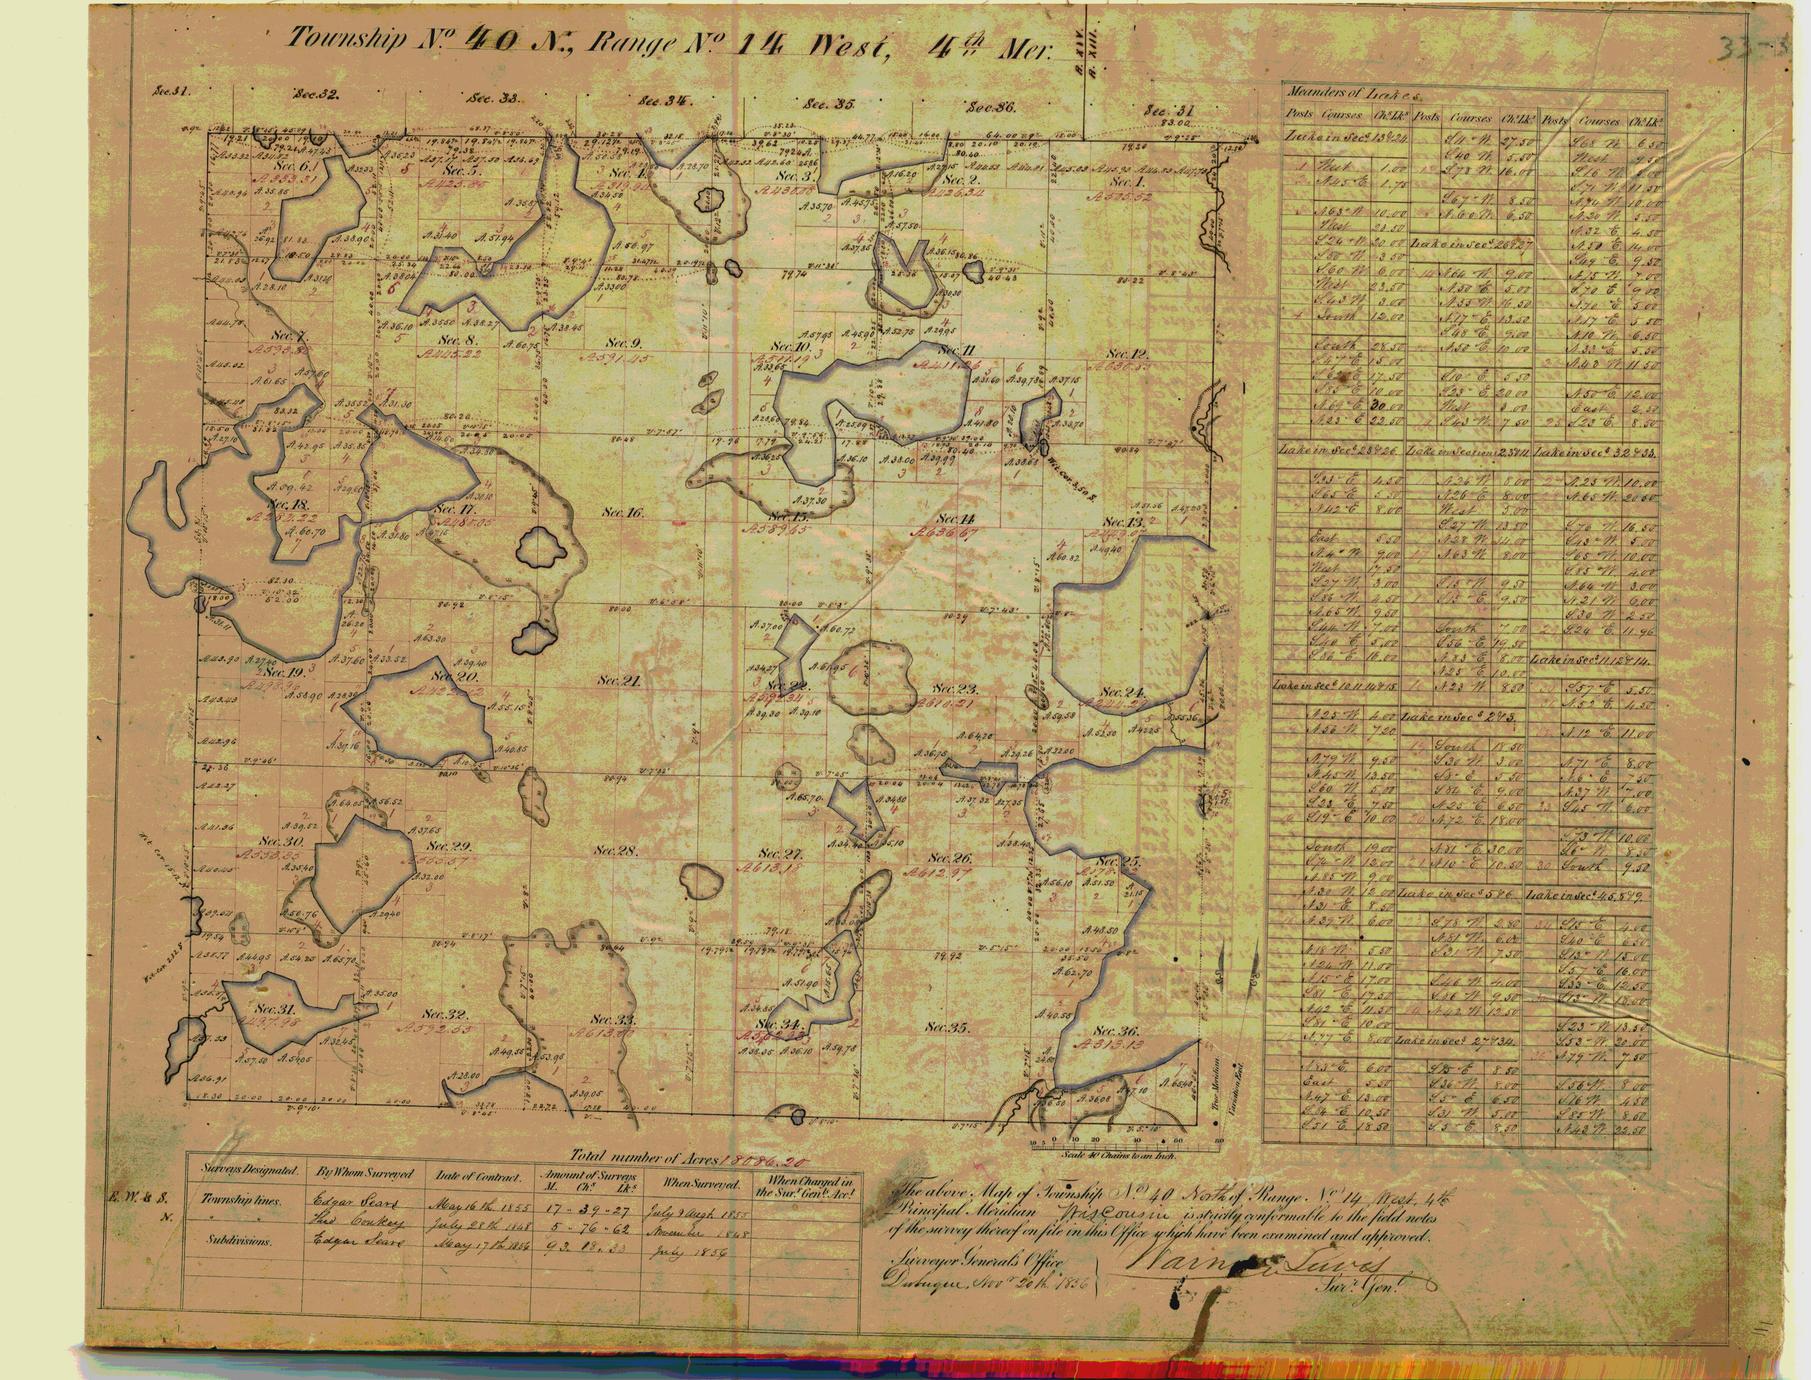 [Public Land Survey System map: Wisconsin Township 40 North, Range 14 West]